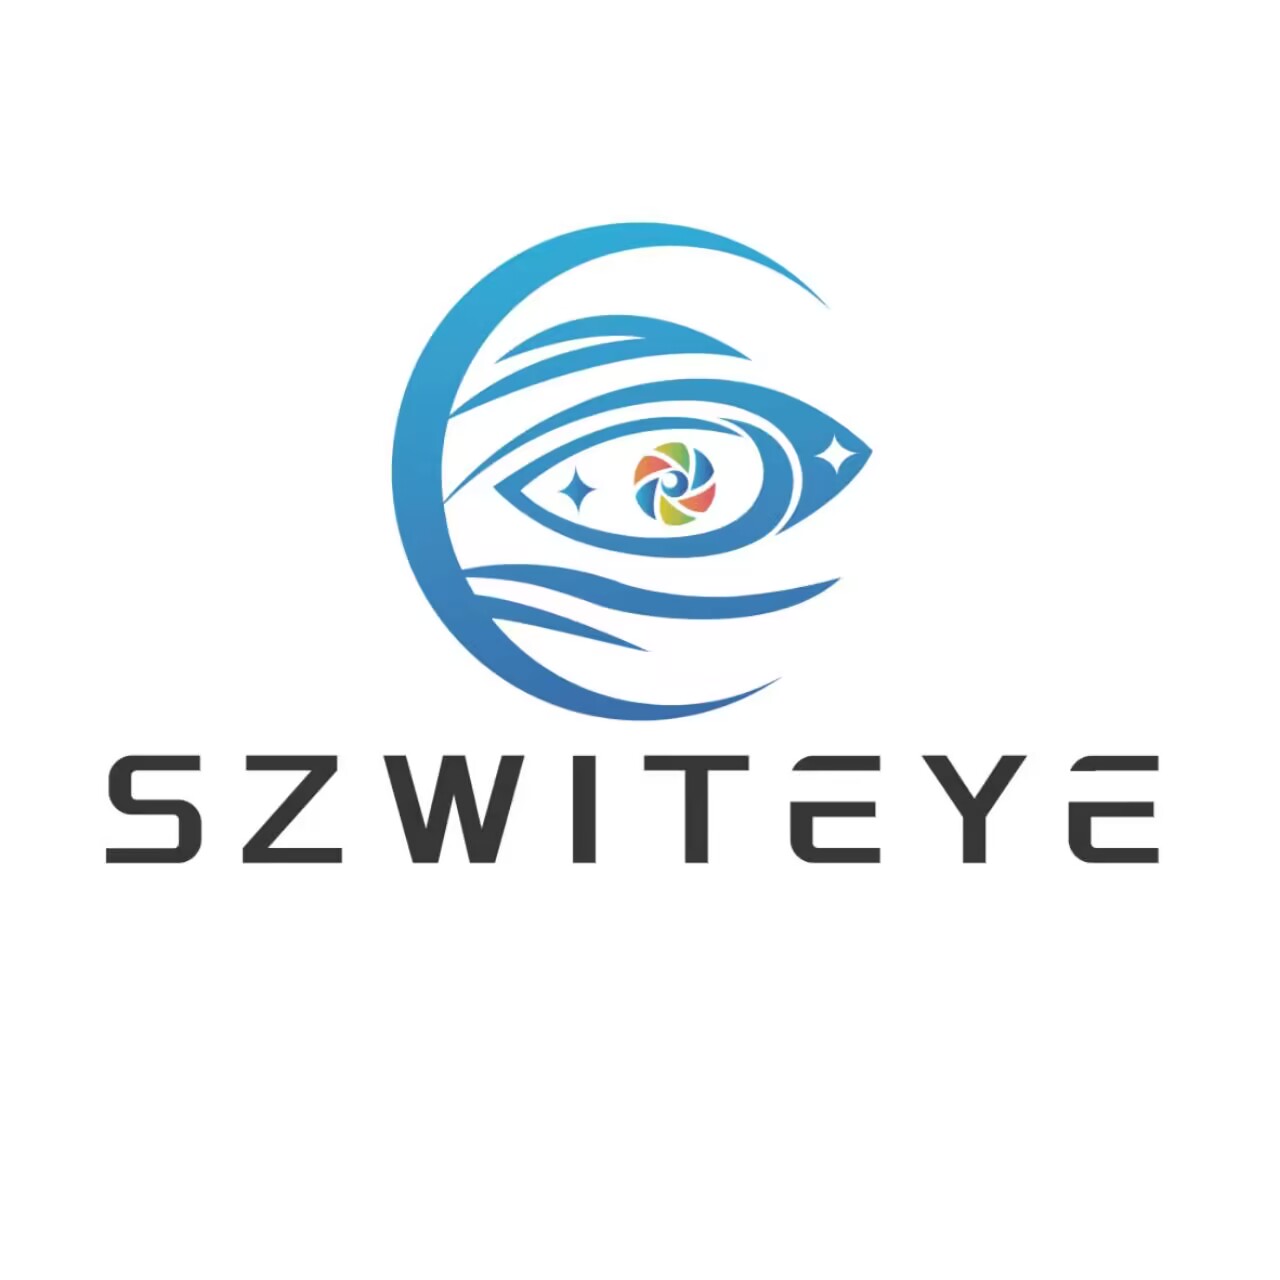 SZWITEYE  Electronics  Co ,ltd